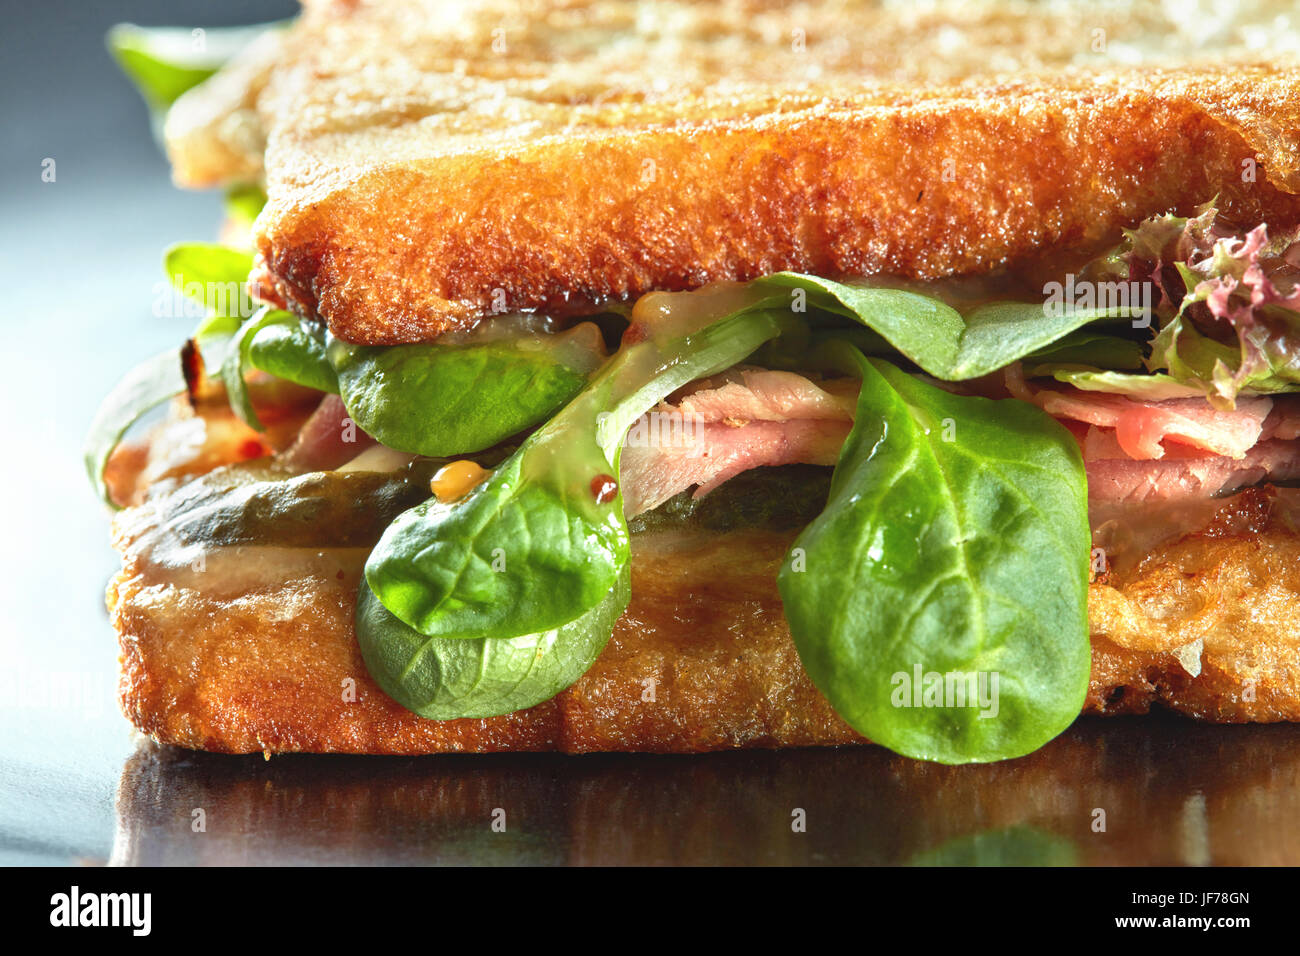 Fresh toasted panini blt sandwich Stock Photo